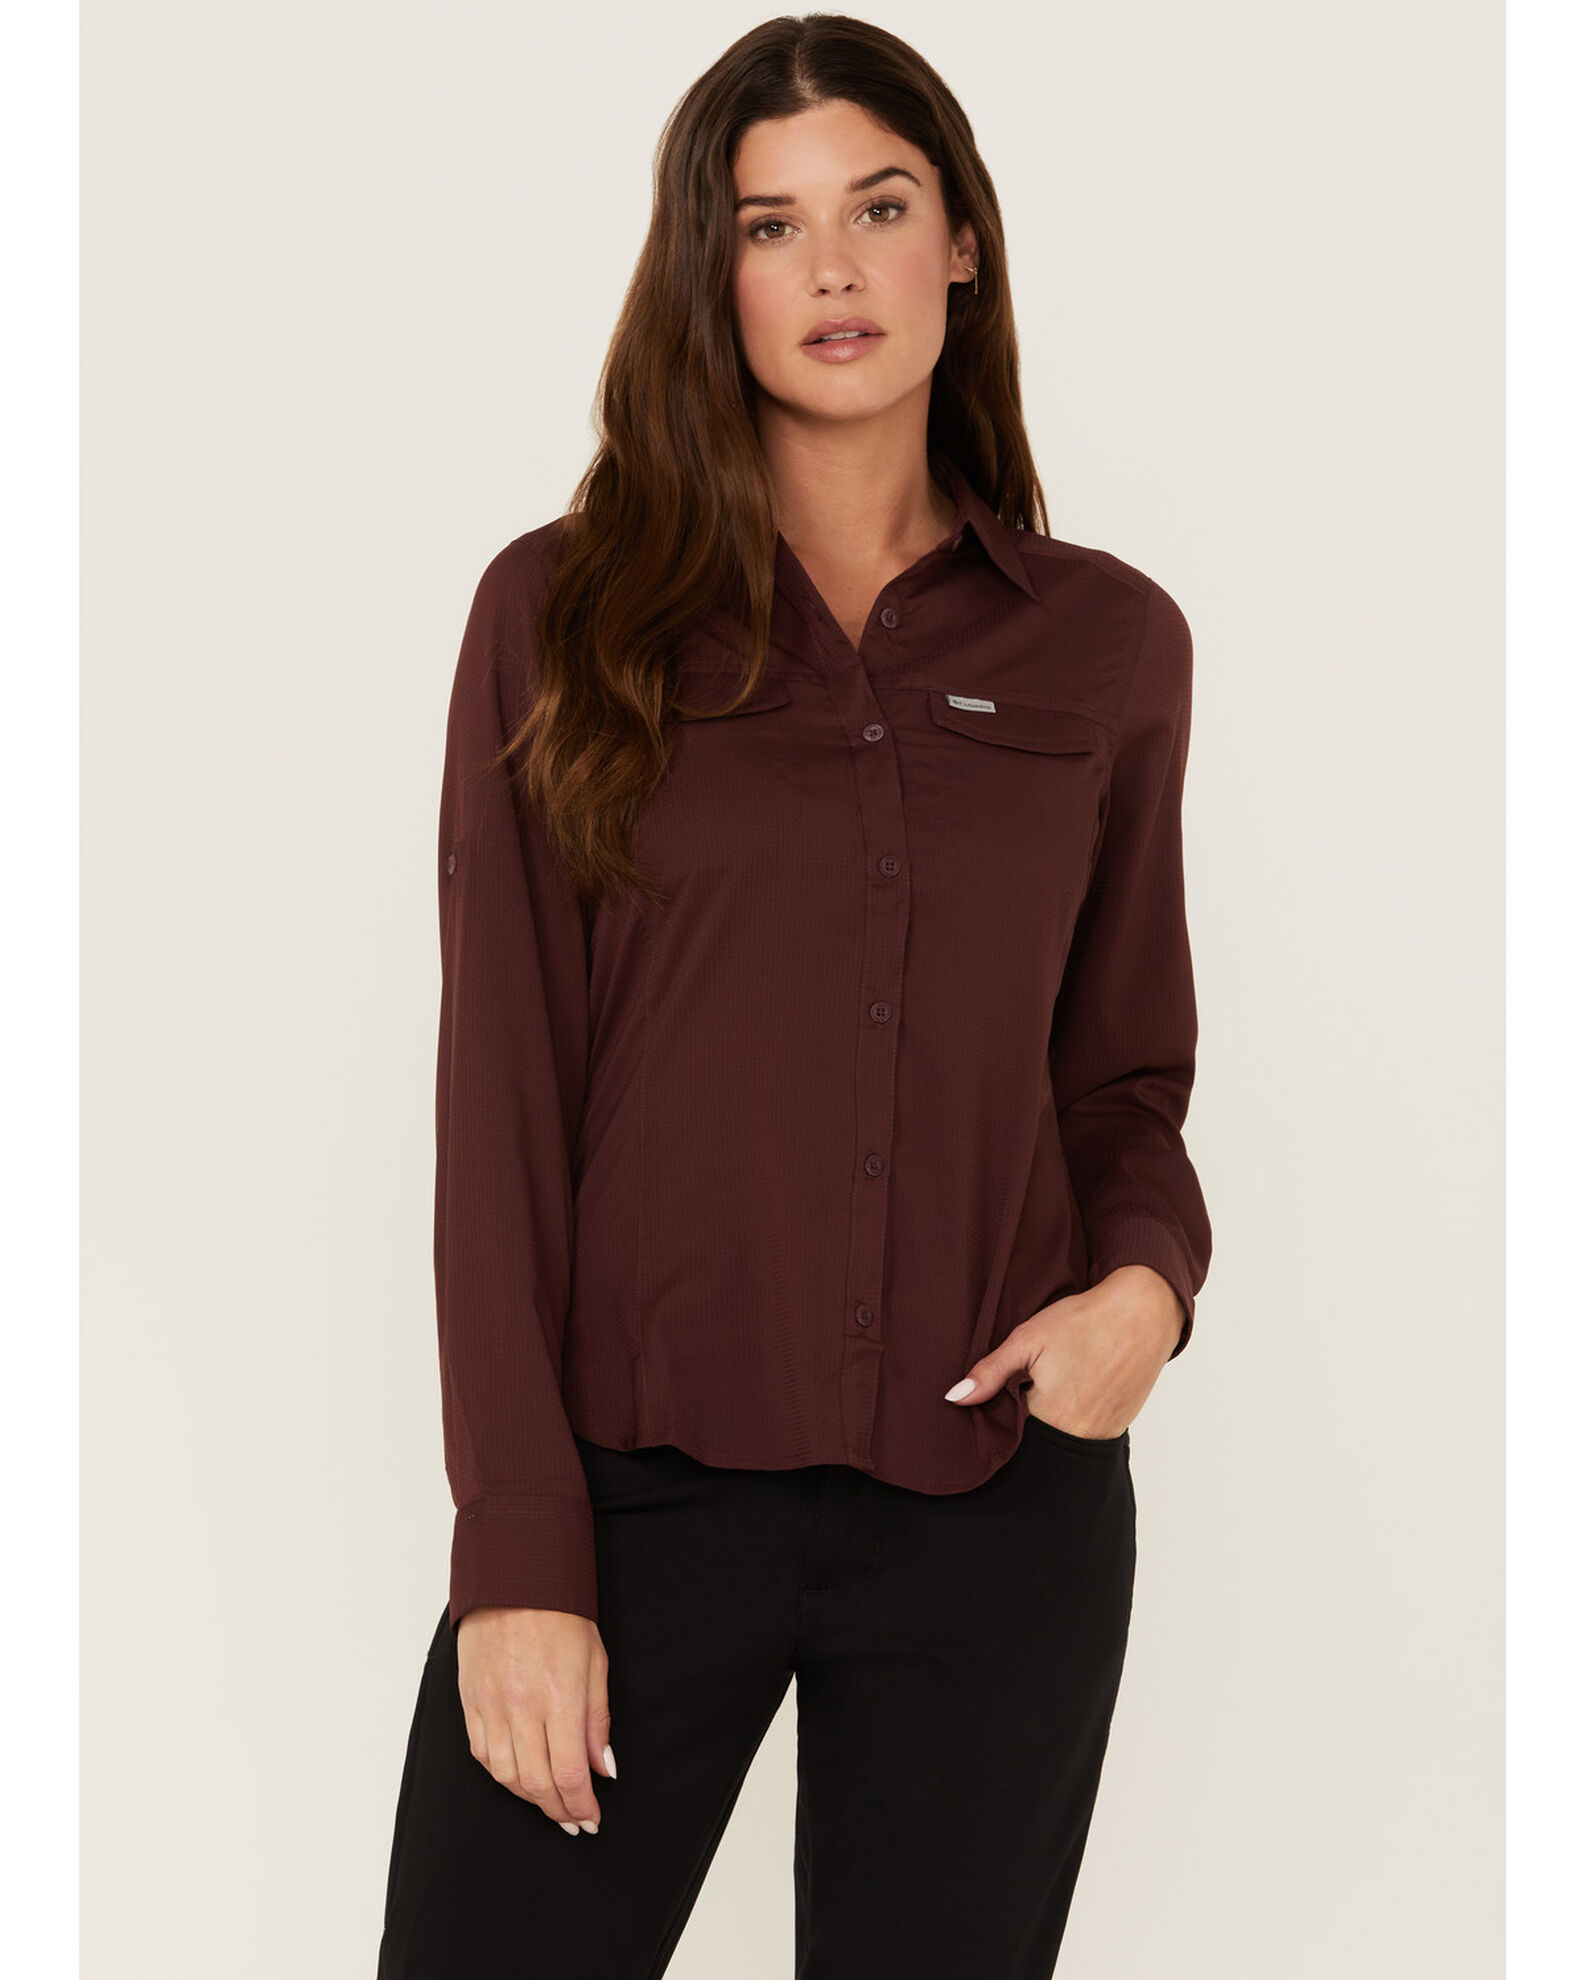 Product Name: Columbia Women's Silver Ridge Lite Malbec Long Sleeve Shirt